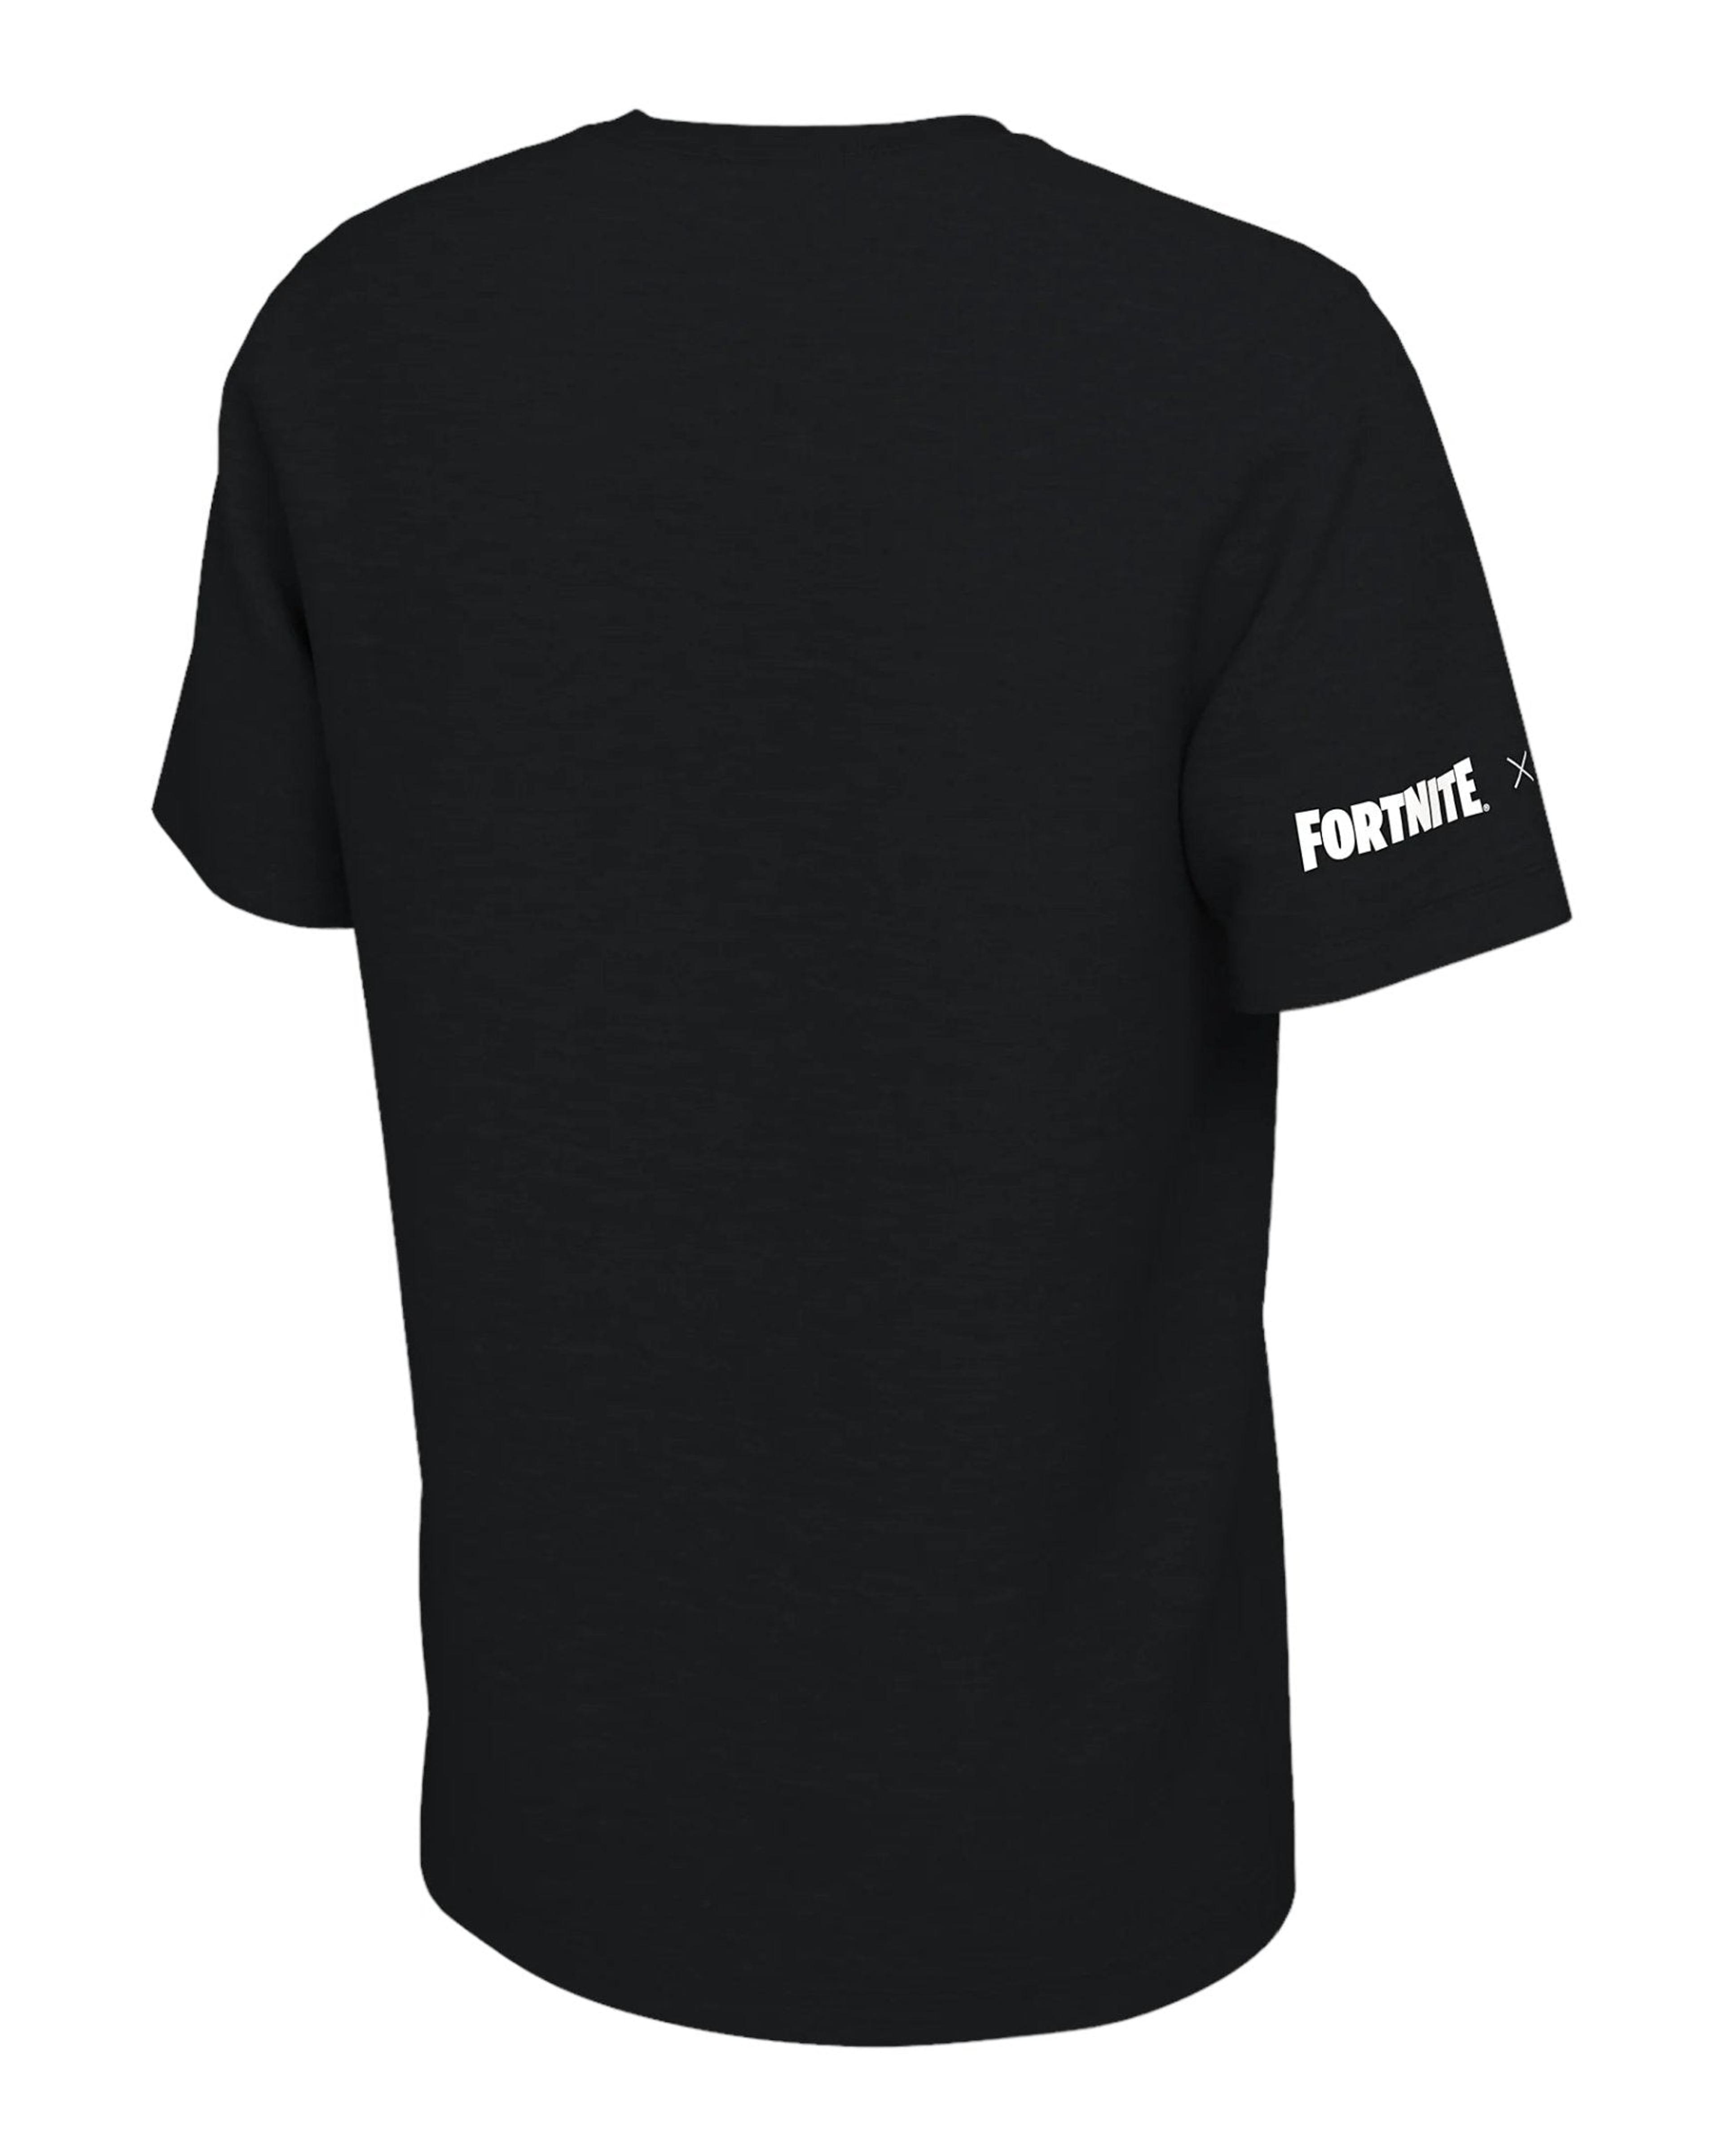 Alternate View 1 of Fortnite x Nike Air Max Airphoria Men's T-Shirt Black